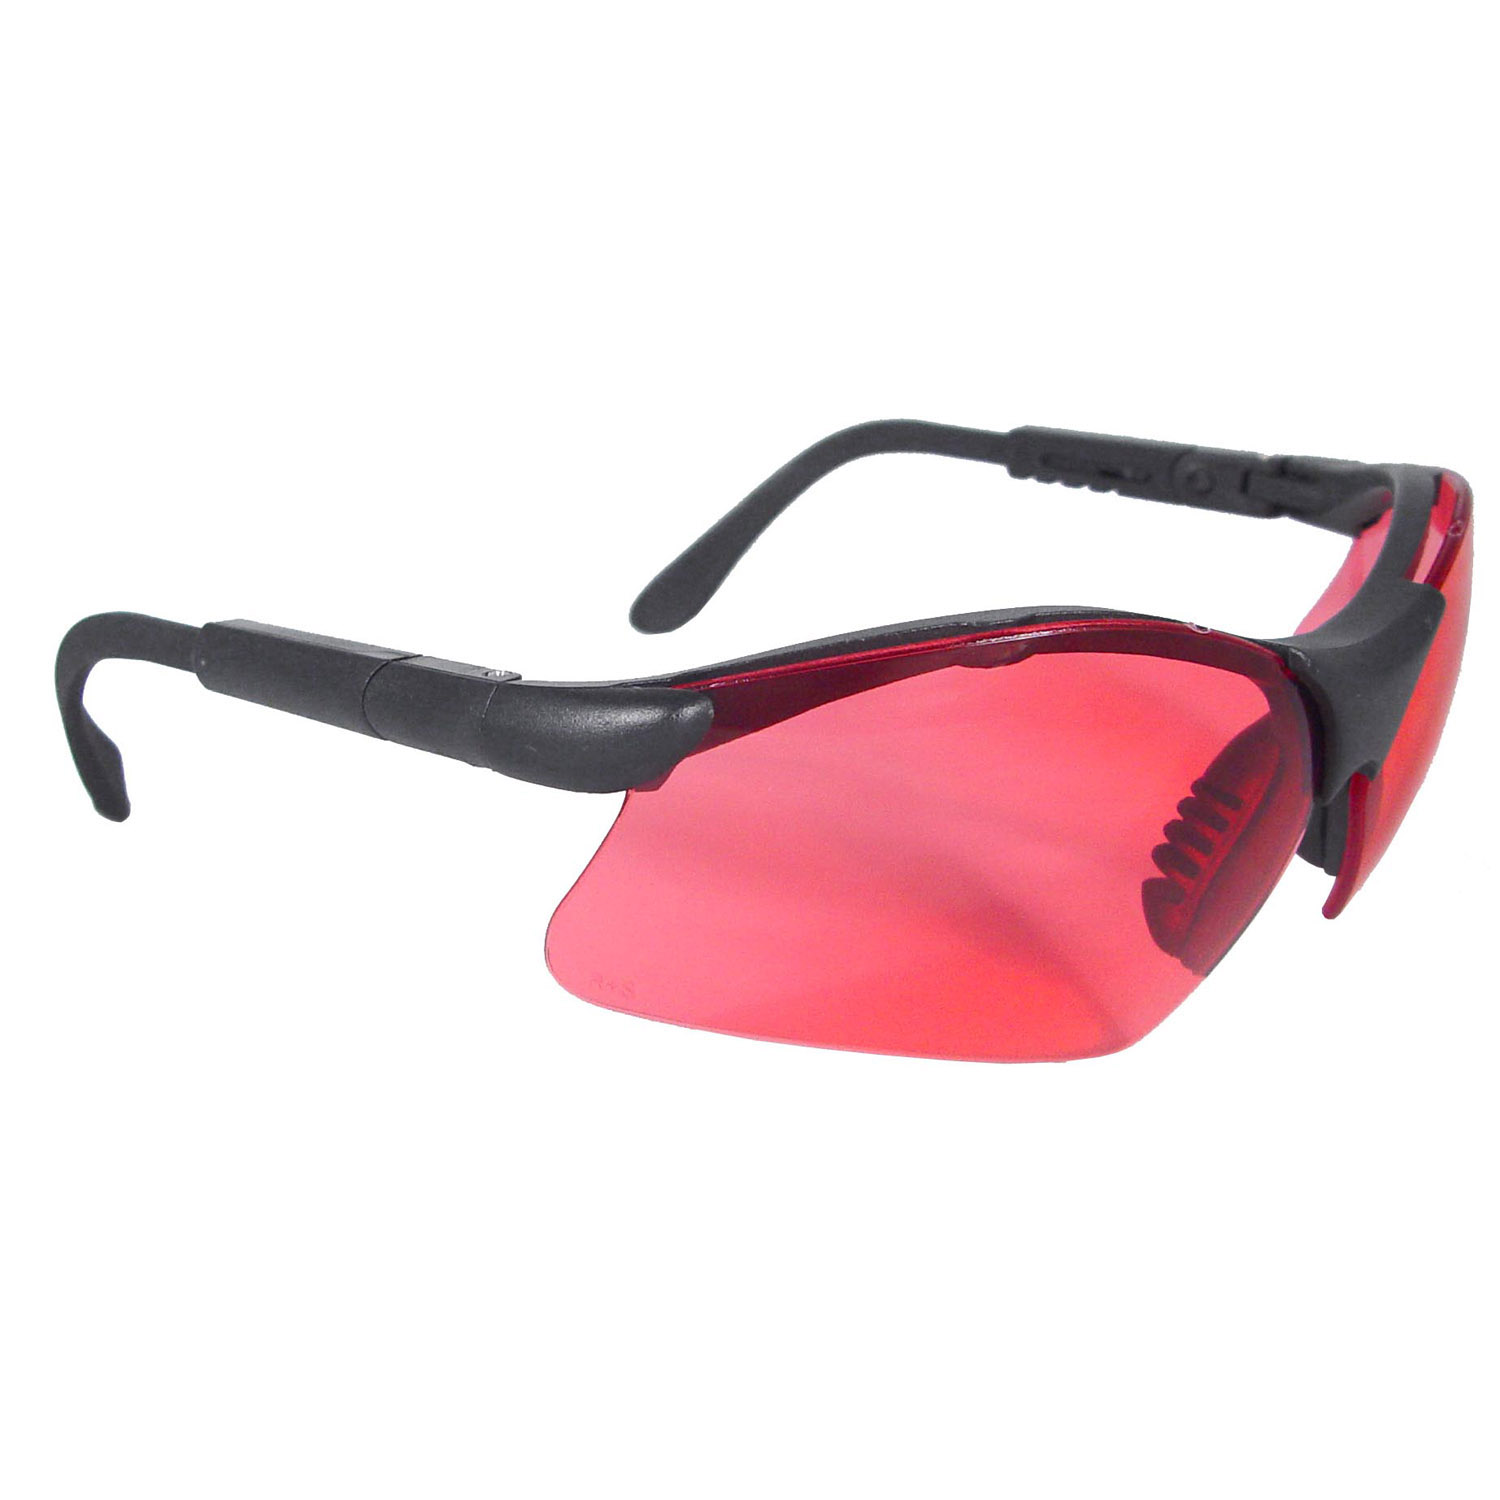 Revelation™ Safety Eyewear - Black Frame - Vermillion Lens - Tinted Lens